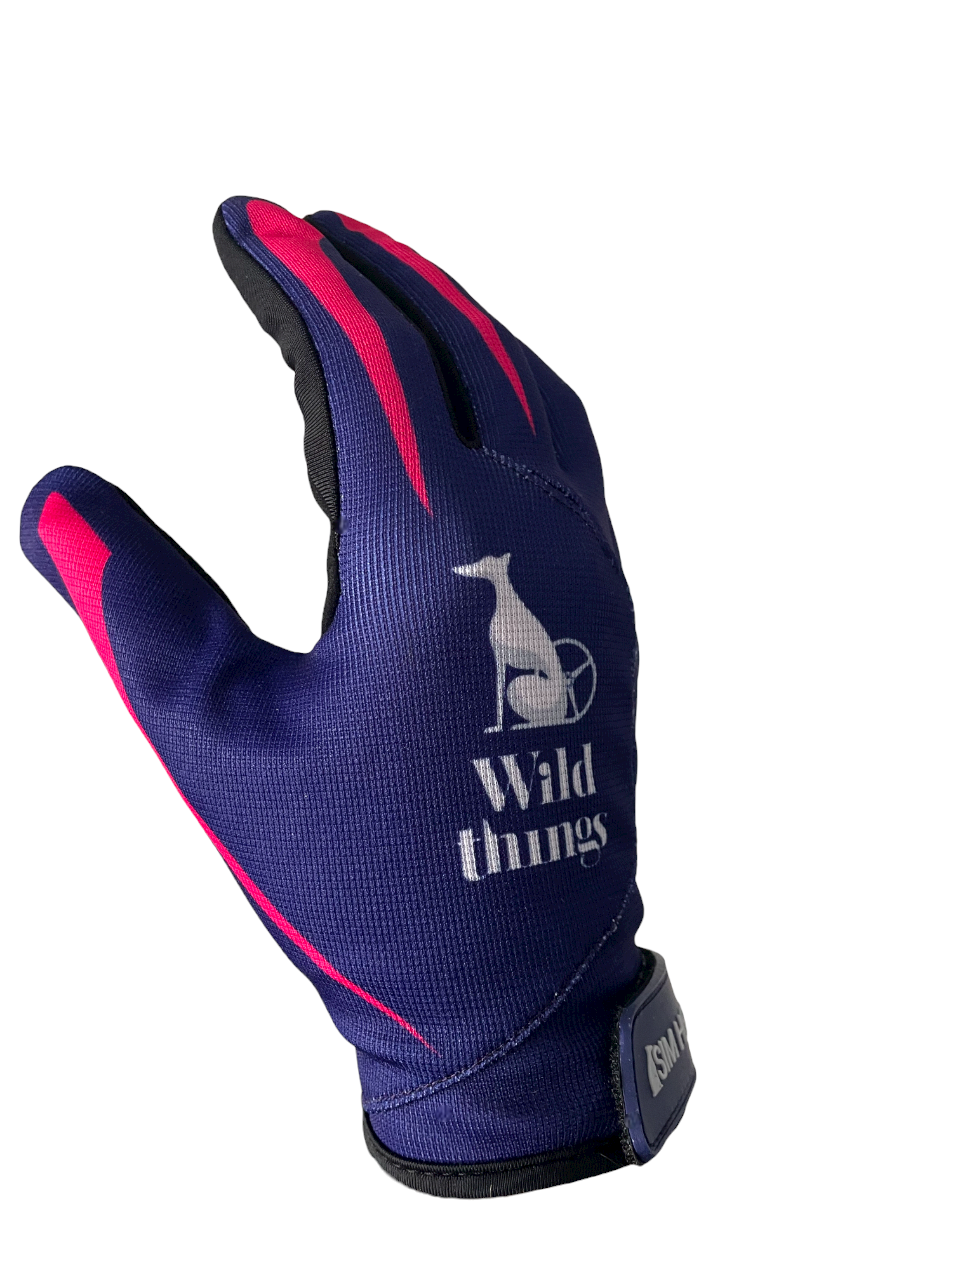 Sim Hound Gloves - Wild Things Racing